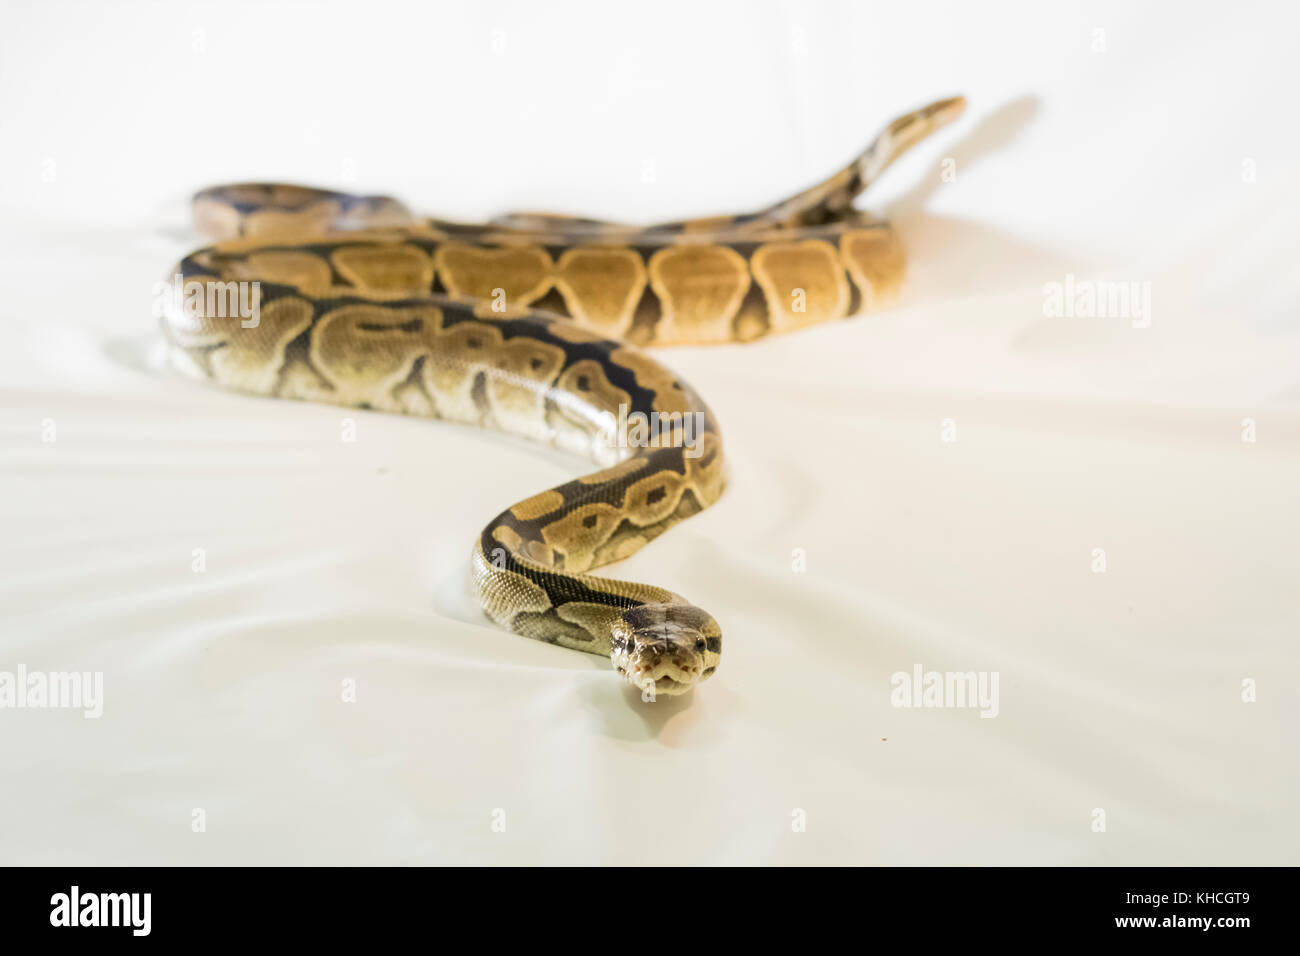 Royal o sfera python snake, isolati su sfondo bianco Foto Stock